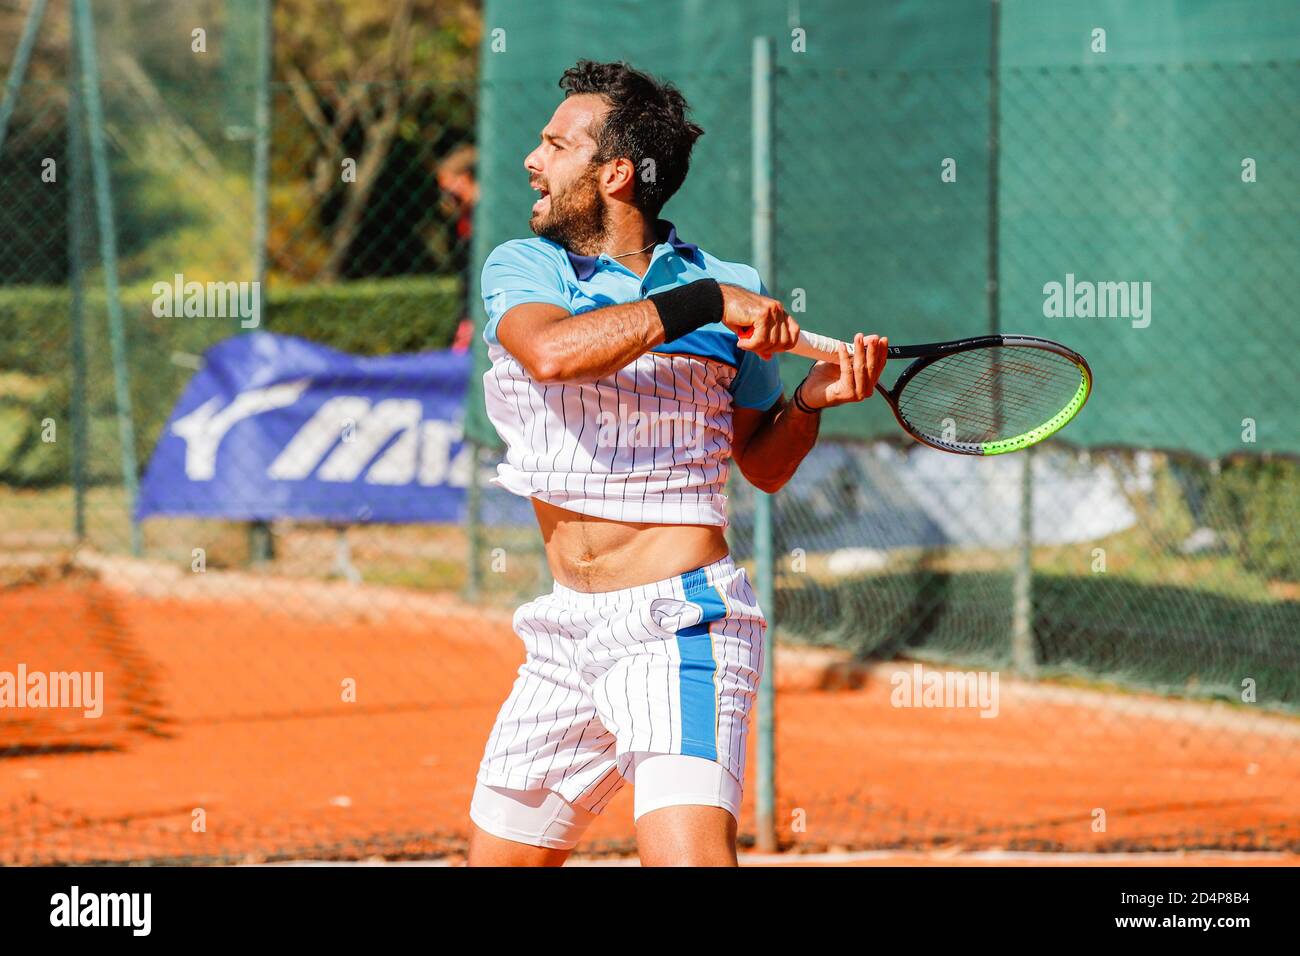 Alvatore Caruso durante ATP Challenger 125 - internazionali Emilia Romagna, Tennis Internationals, parma, Italy, 09 Oct 2020 Credit: LM/Roberta Corradi Foto Stock